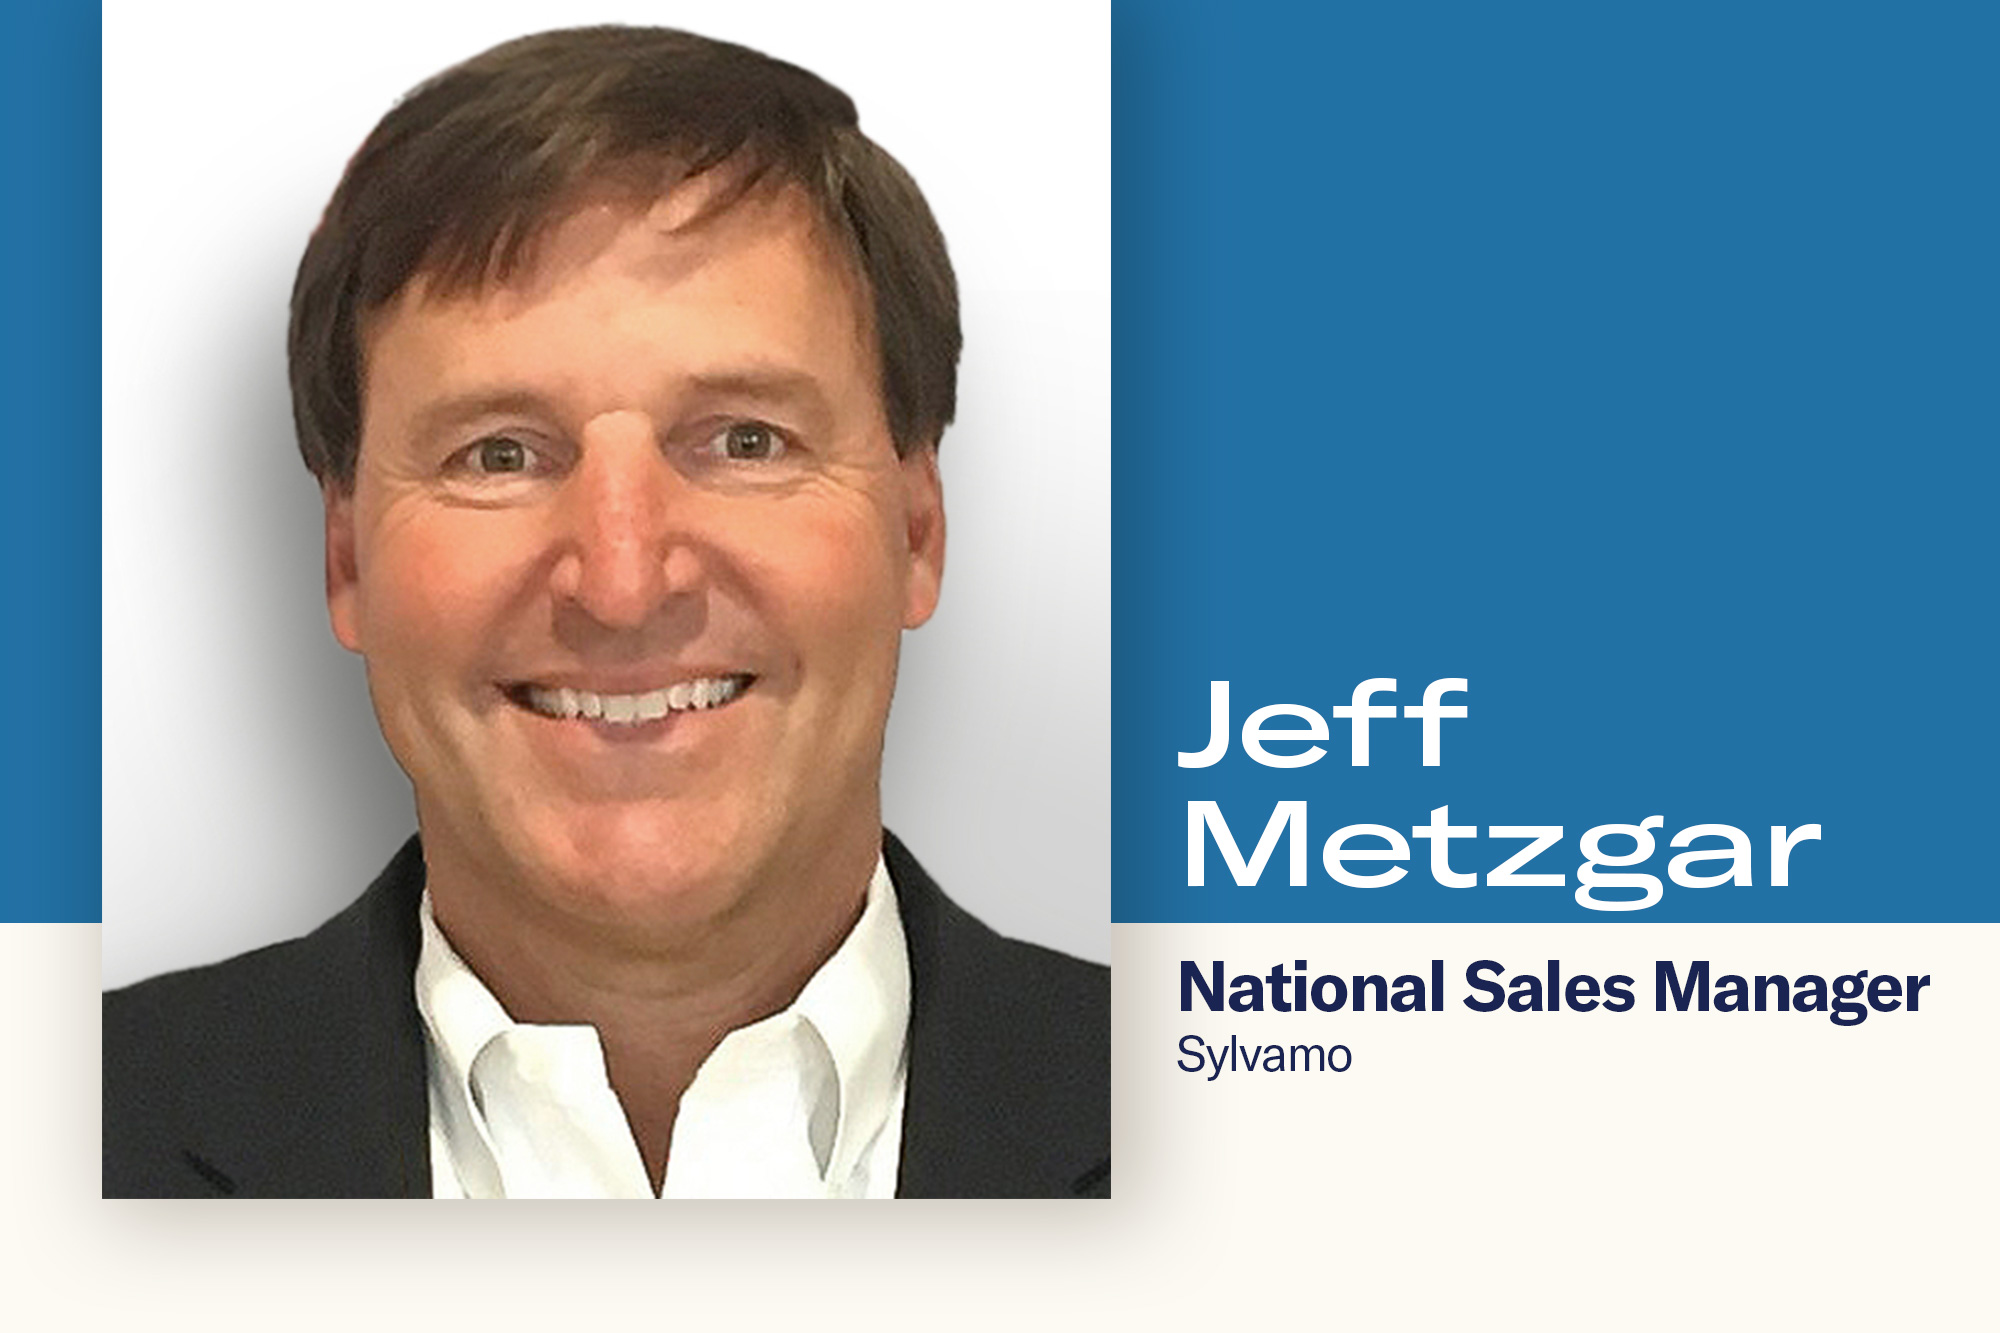 Meet Jeff Metzgar